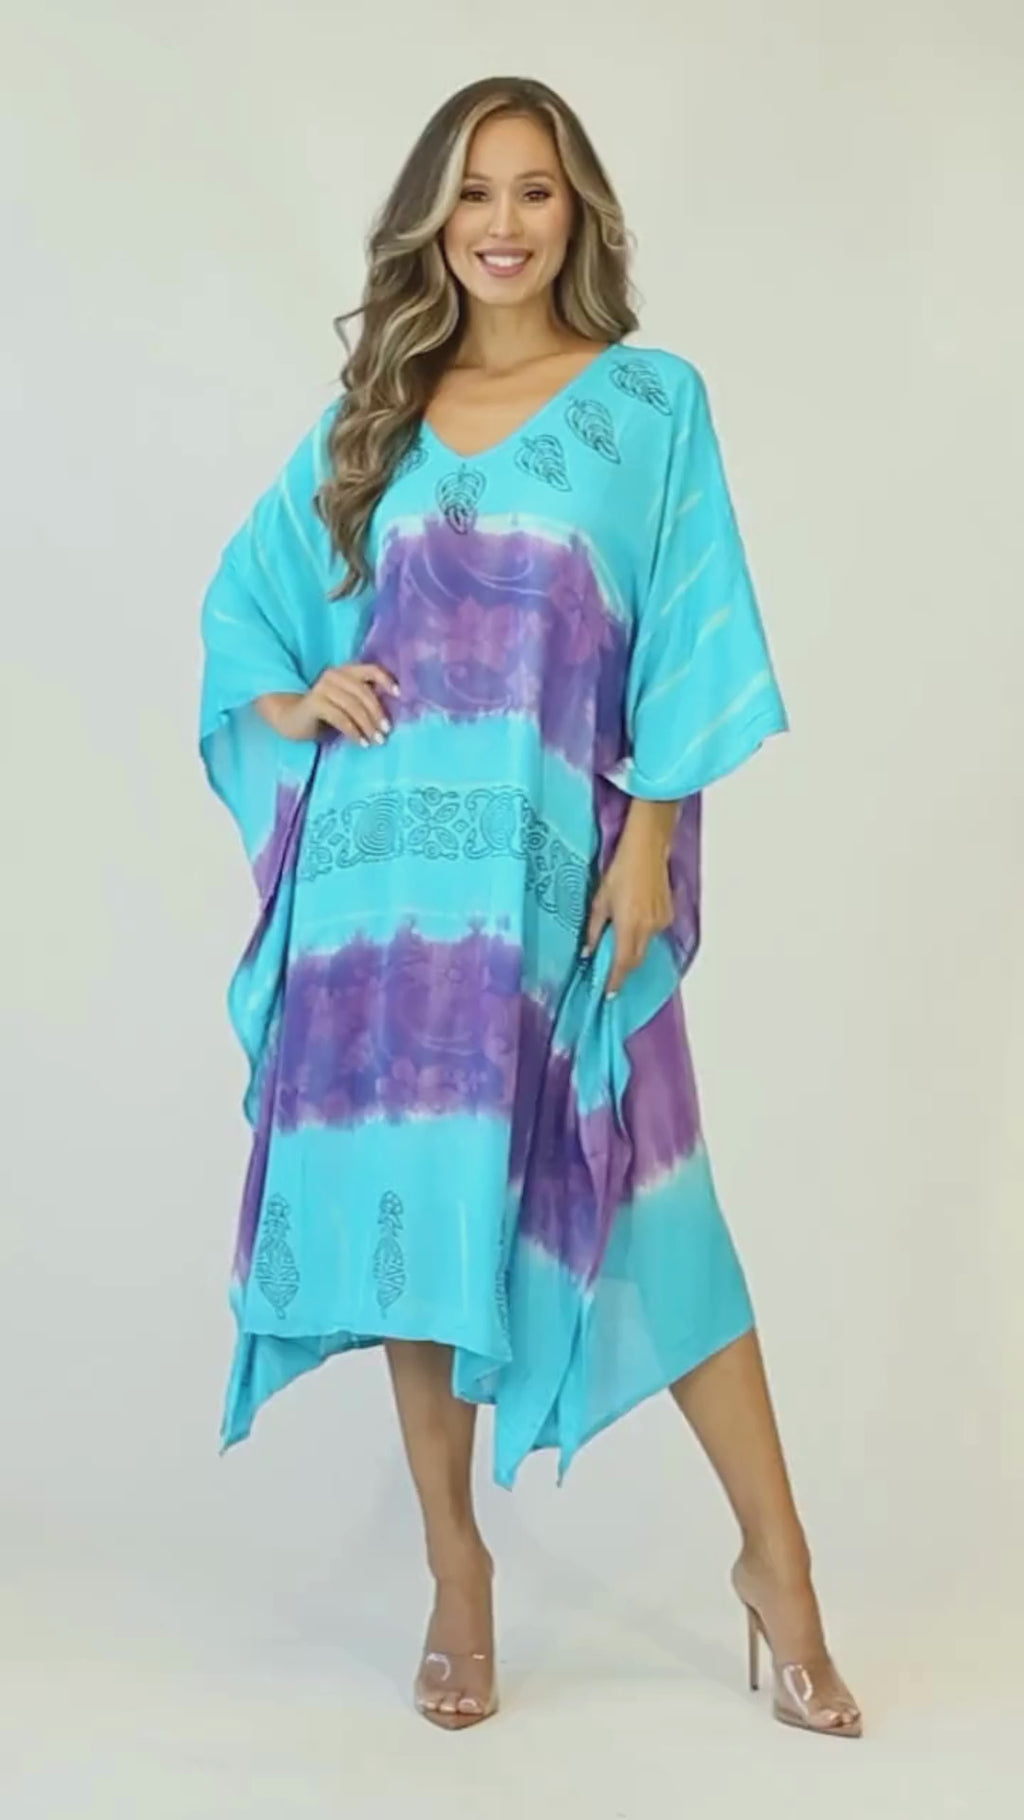 Sakkas Clementine Second Women's Tie Dye Caftan Dress/Cover Up Beach Kaftan Boho#color_39-PurpleTurquoise